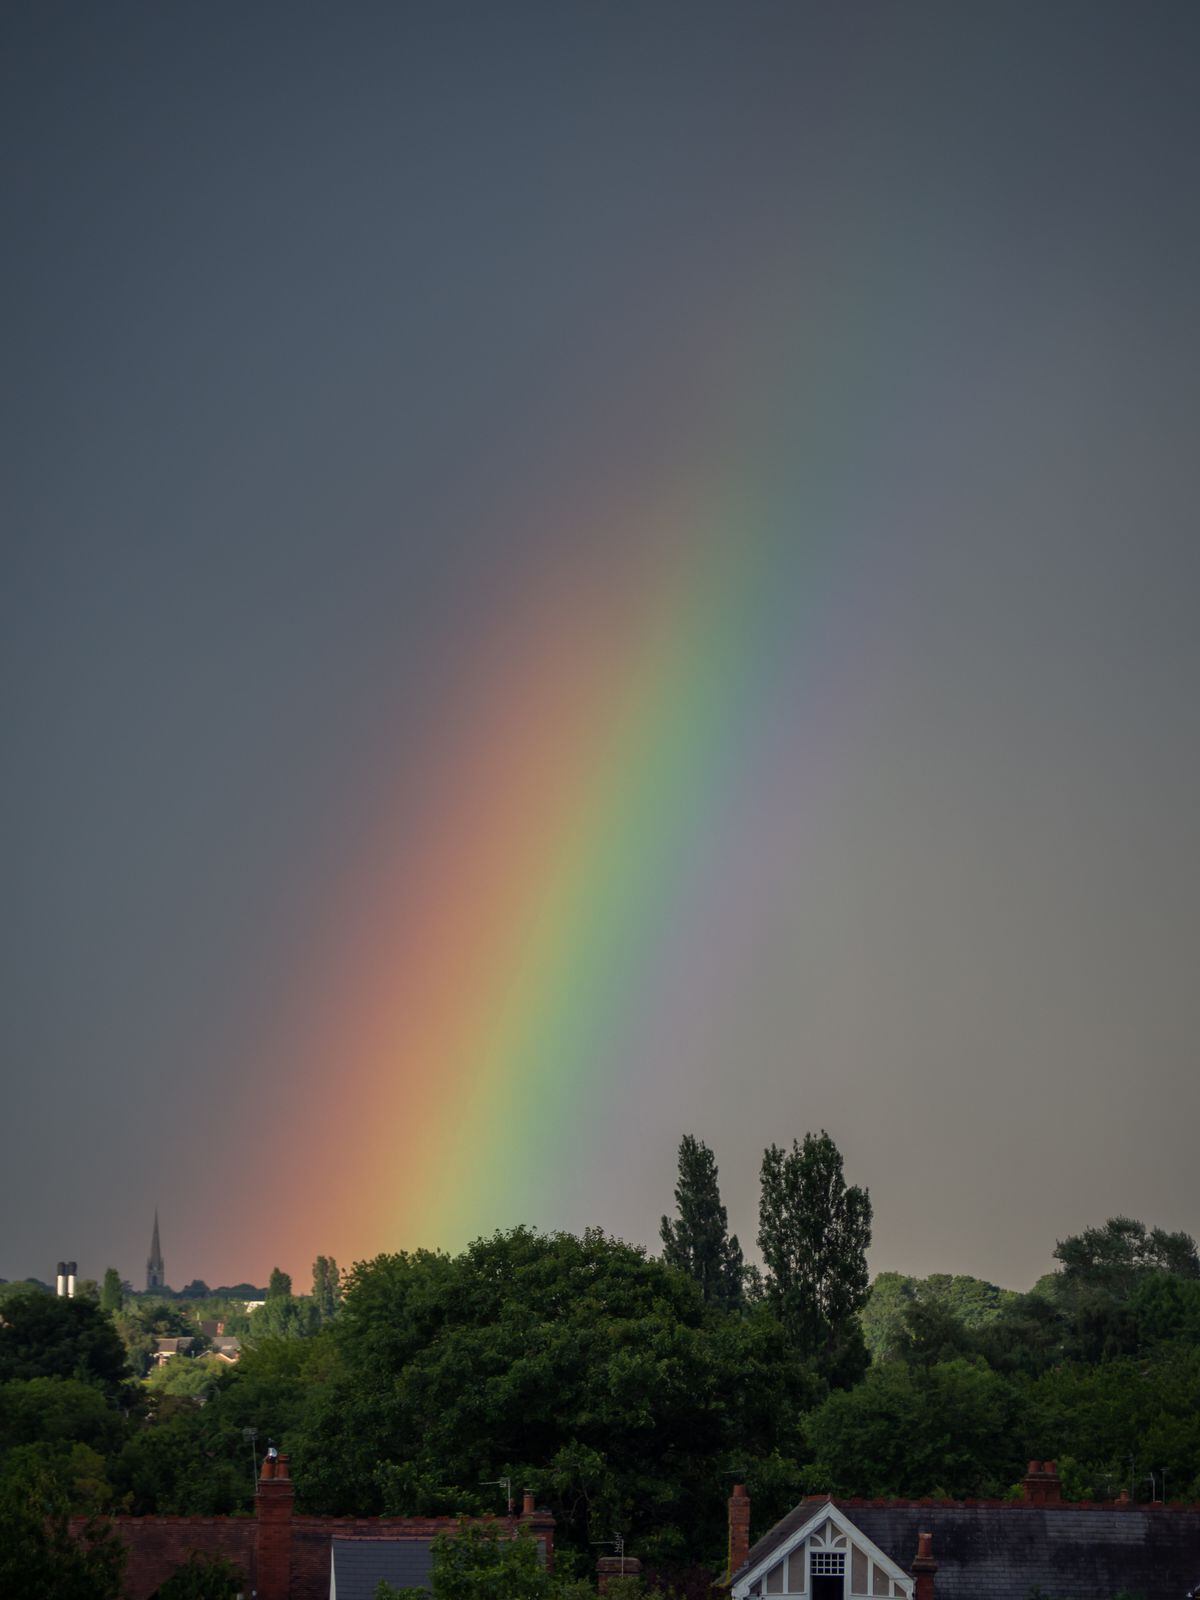 A rainbow seen in Kingswinford by Joanna Noble